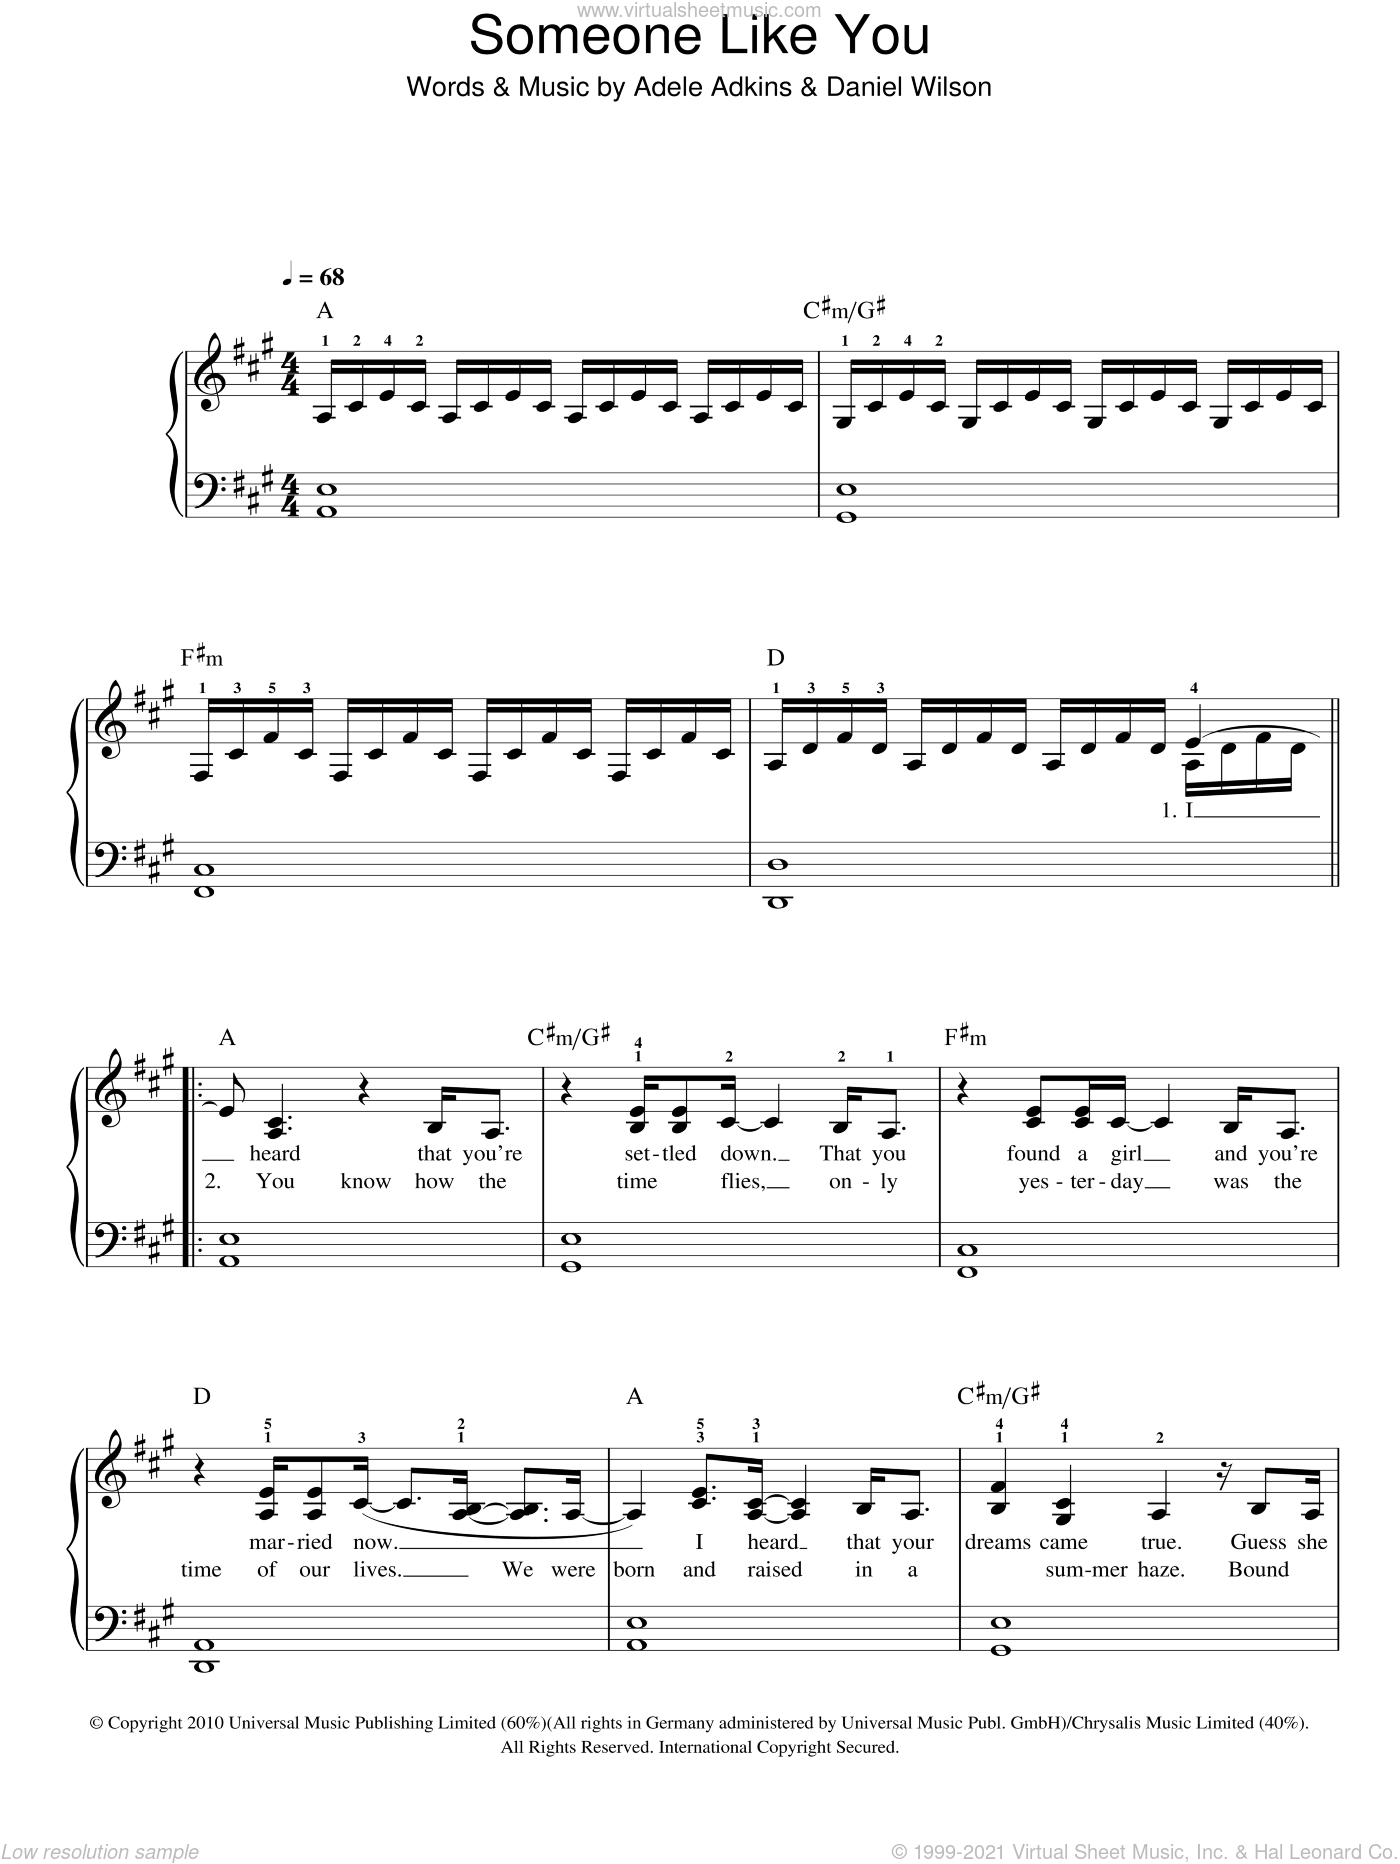 Adele - Someone Like You sheet music for piano solo1400 x 1864